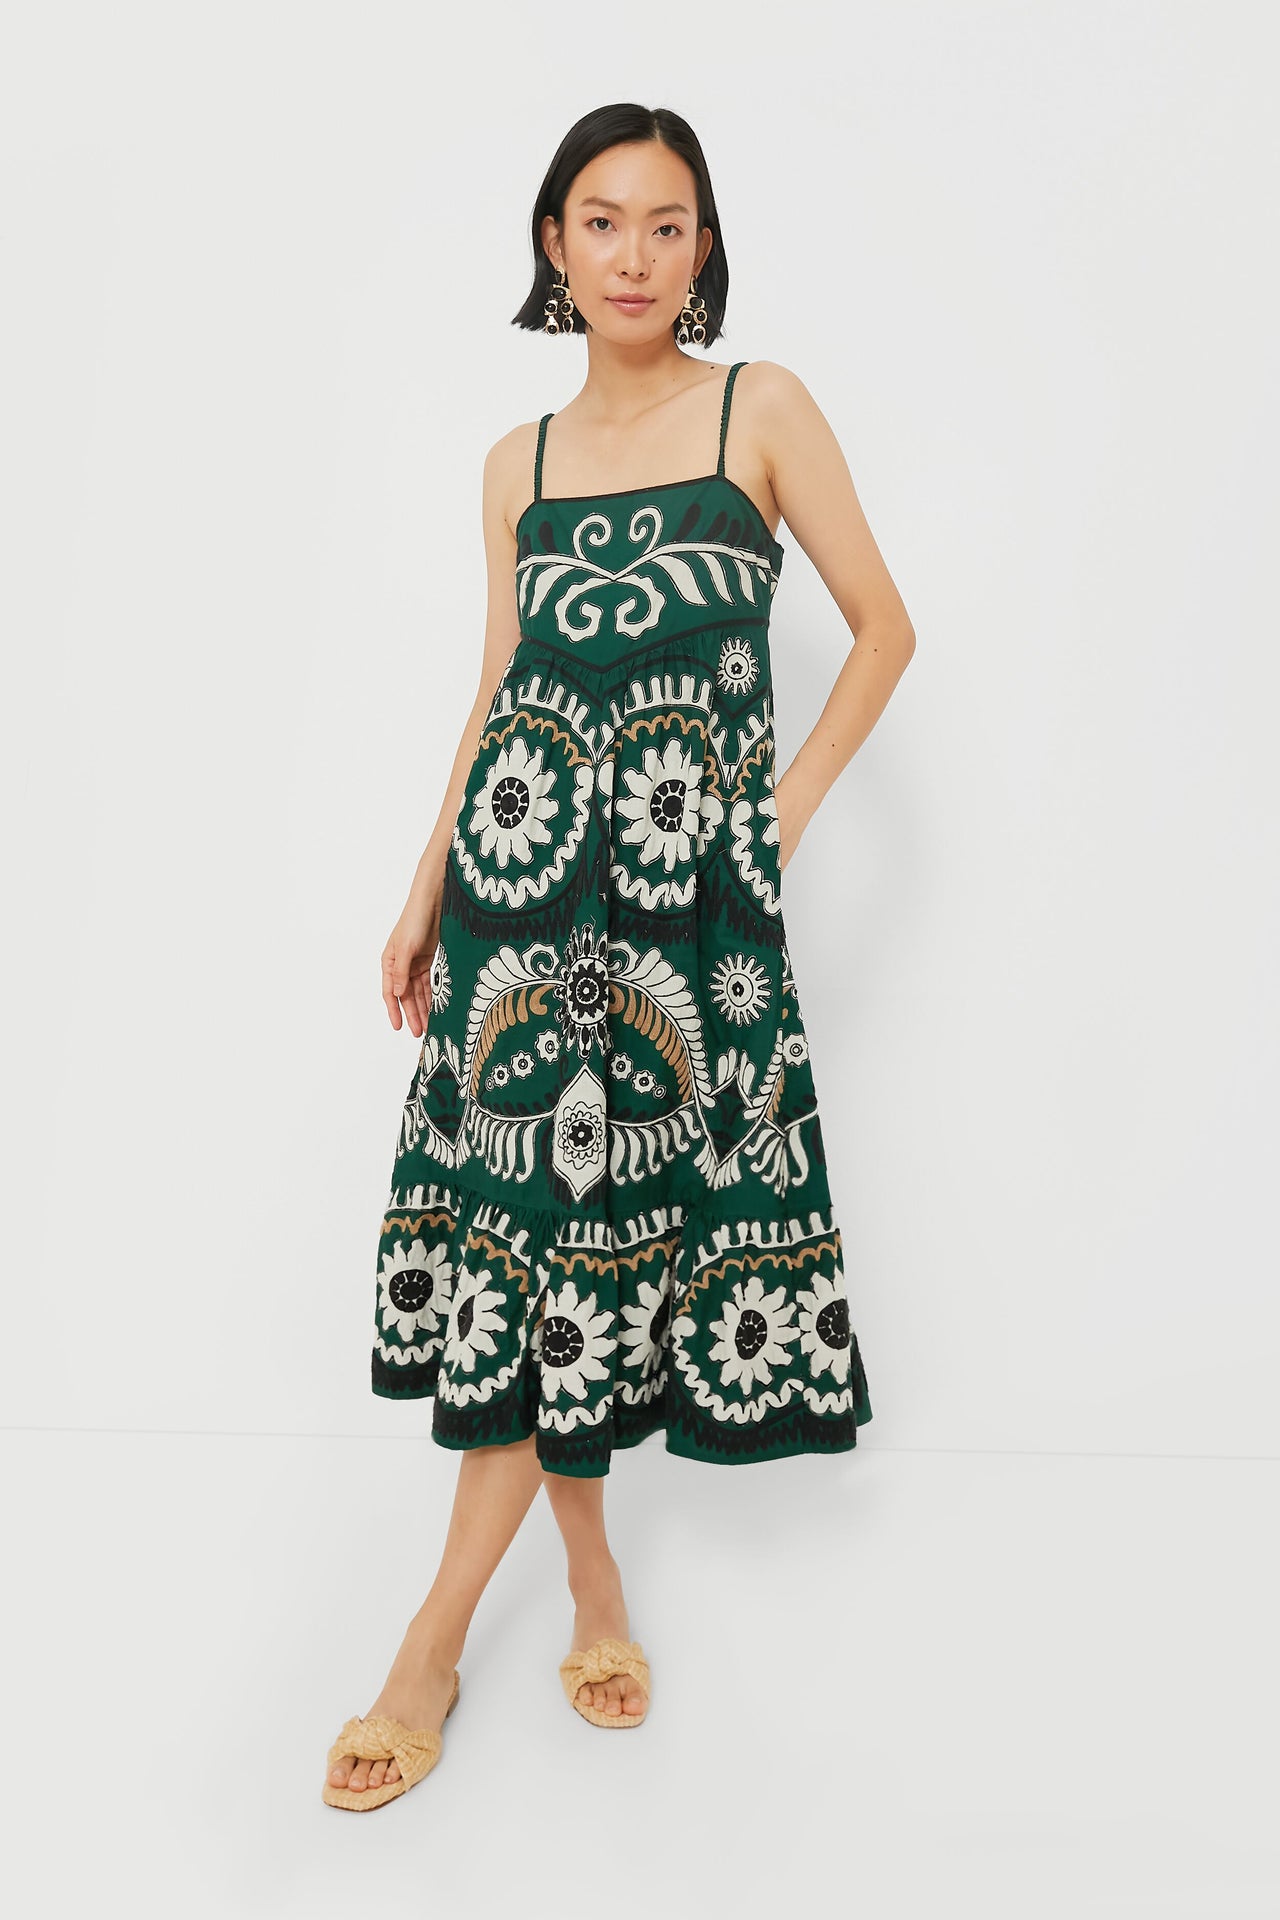 SEA NEW YORK Green Charlough Print Sleeveless Embroidered Dress